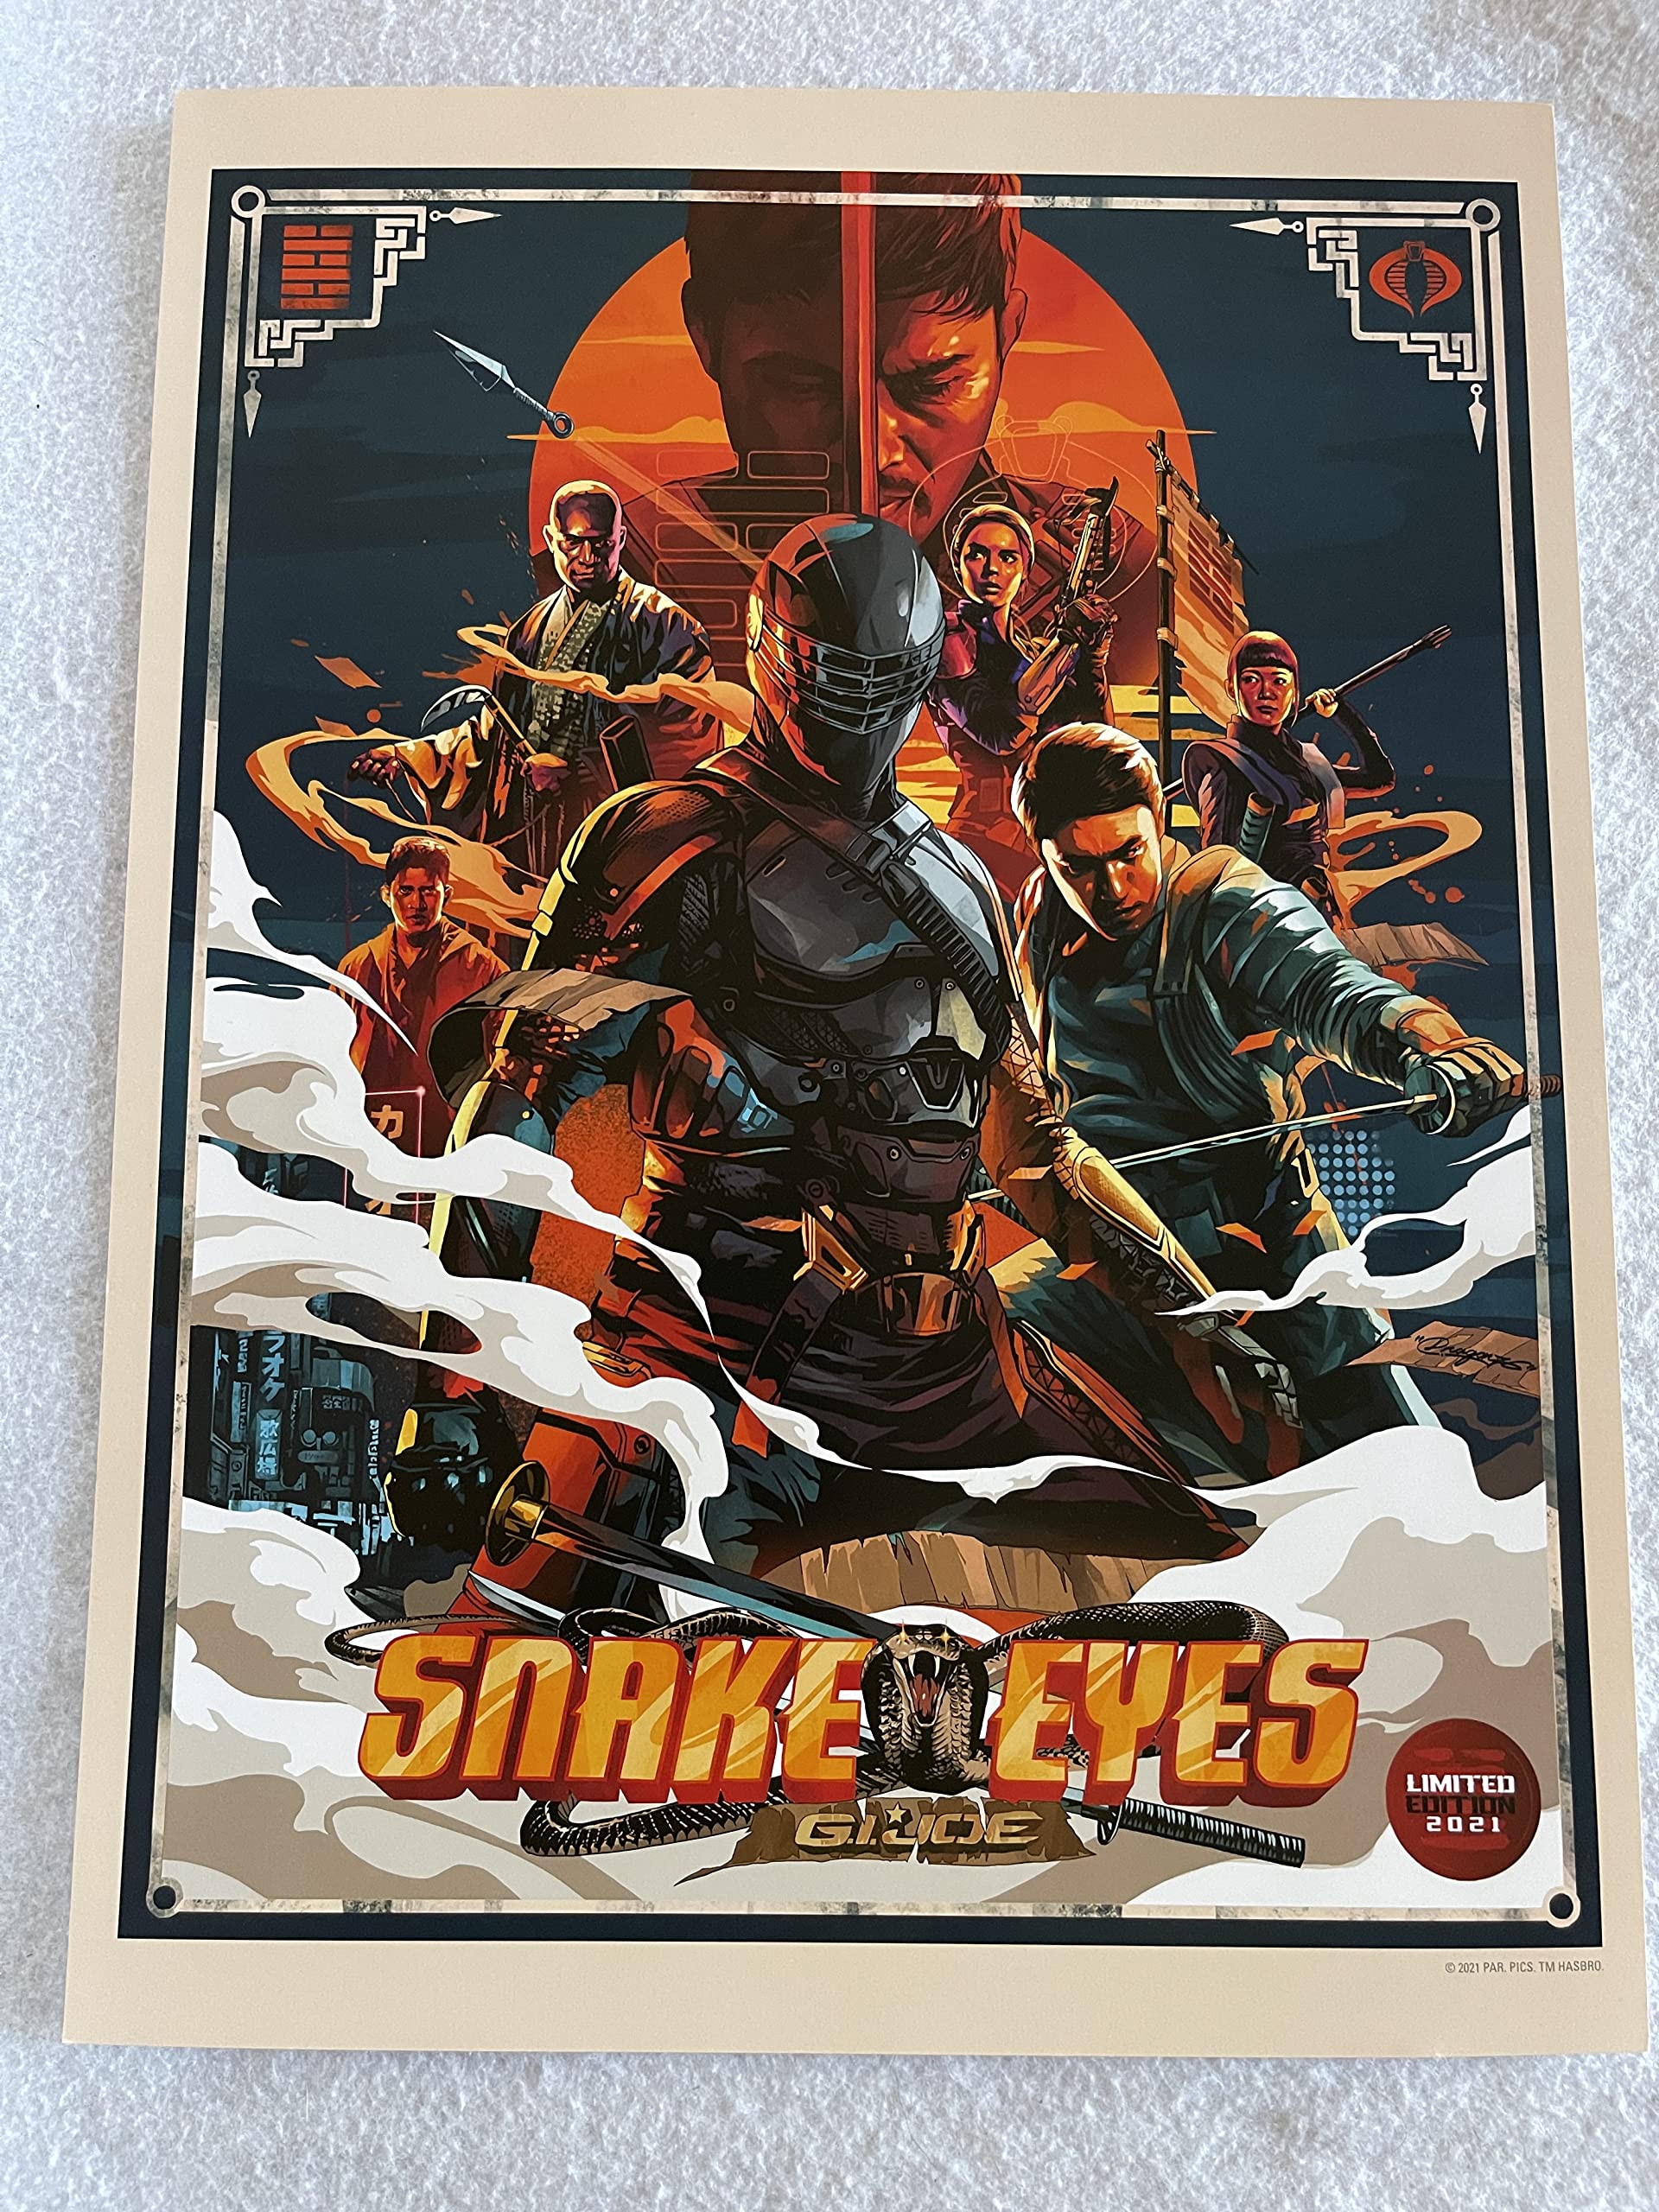 Poster Of Snake Eyes G.I. Joe Origins 2021 Movie Wallpapers